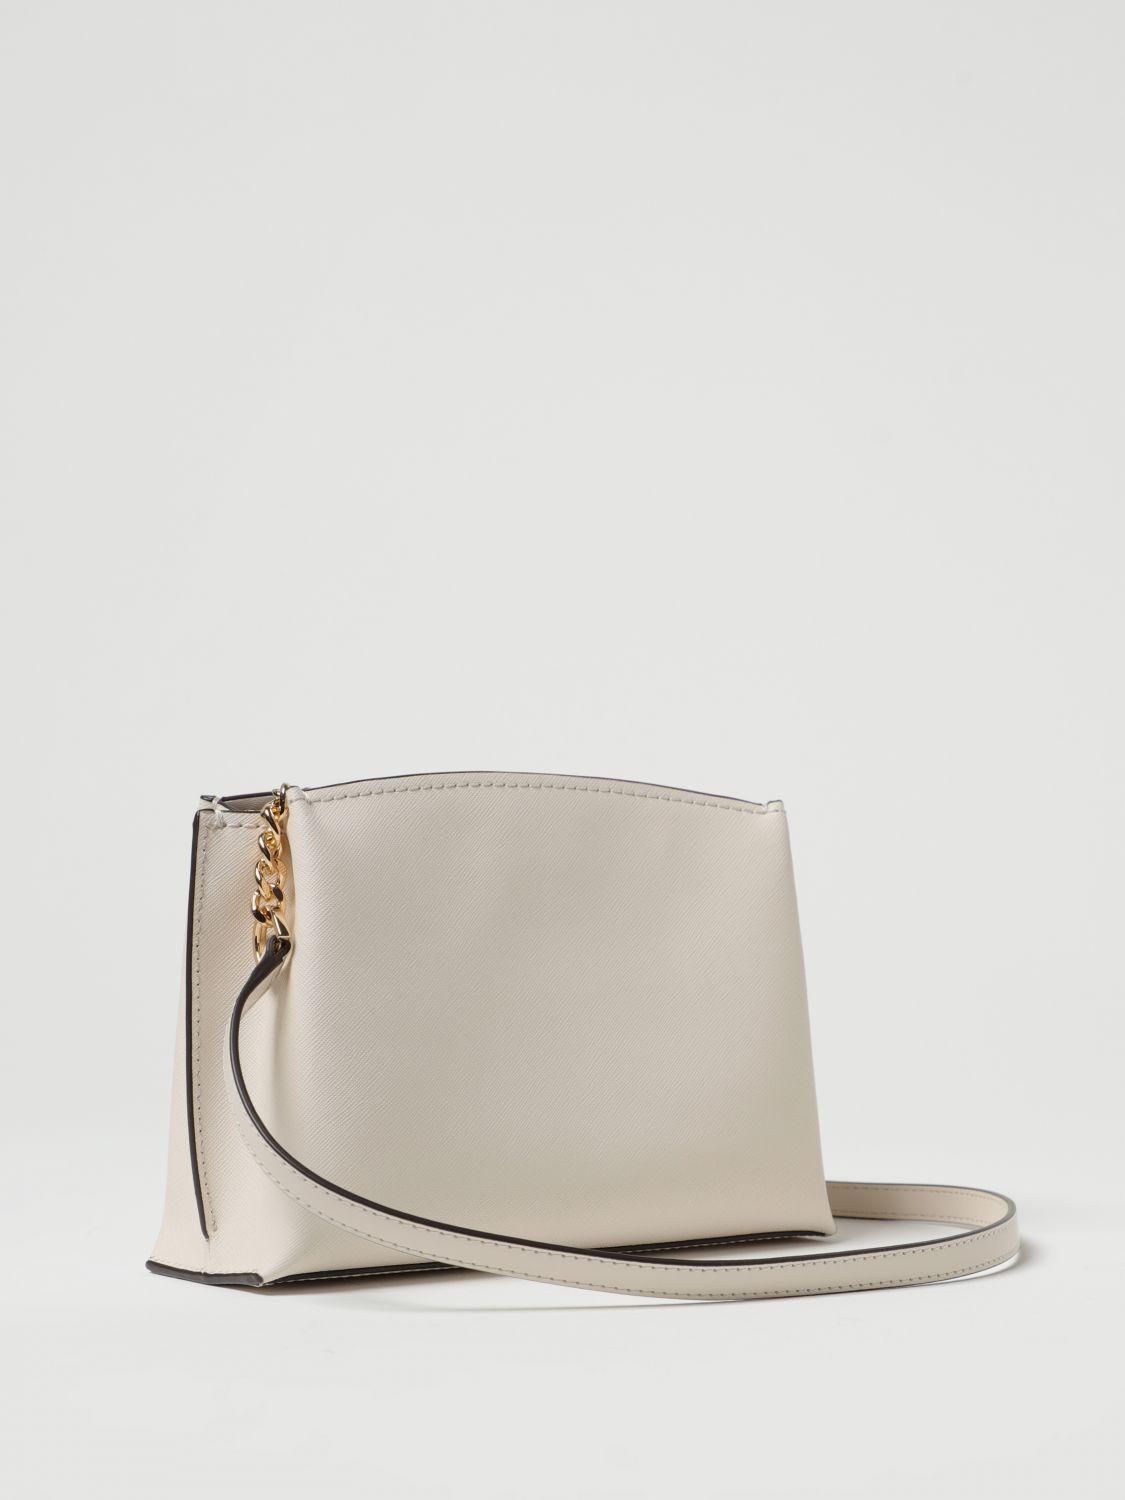 Buy Michael Kors Karlie Small Leather Crossbody Bag, Cream Color Women